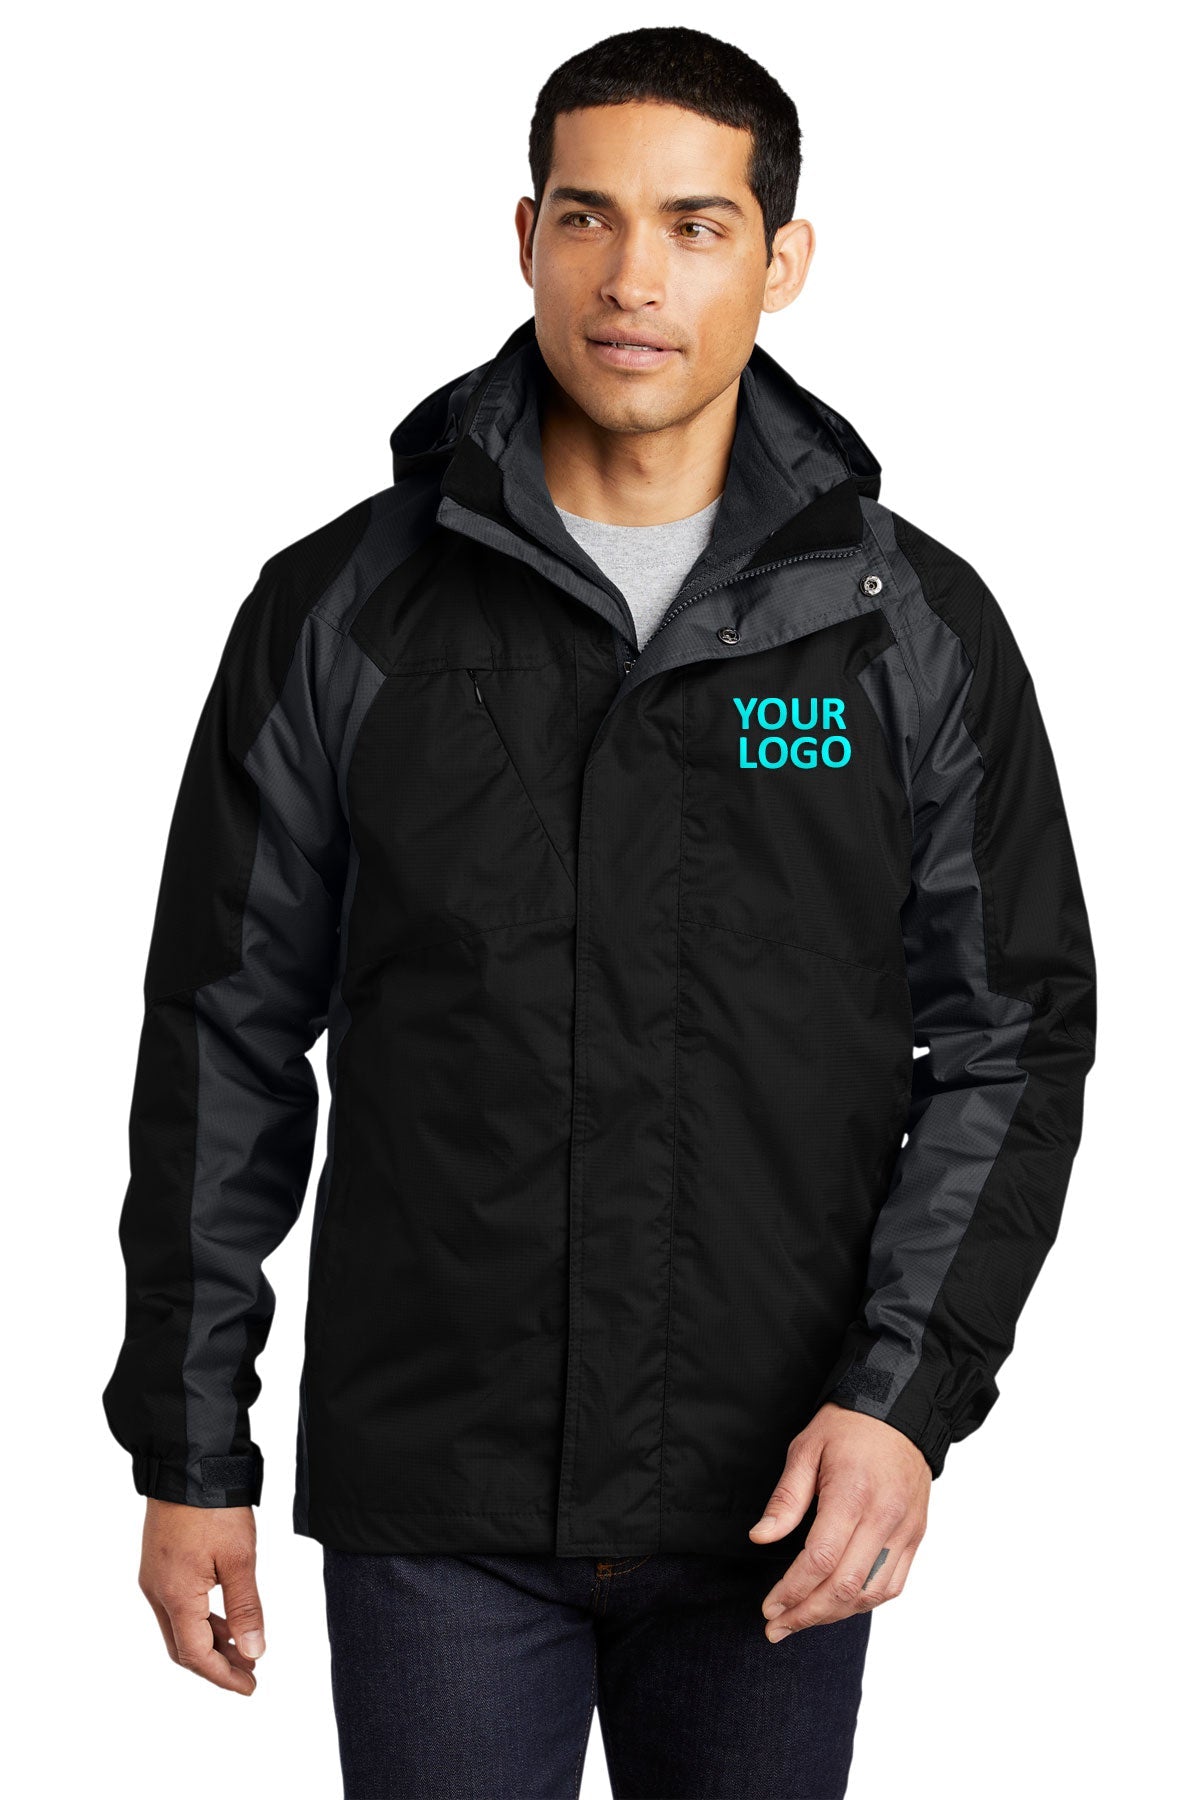 Port Authority Black/ Ink Grey J310 business jackets with logo